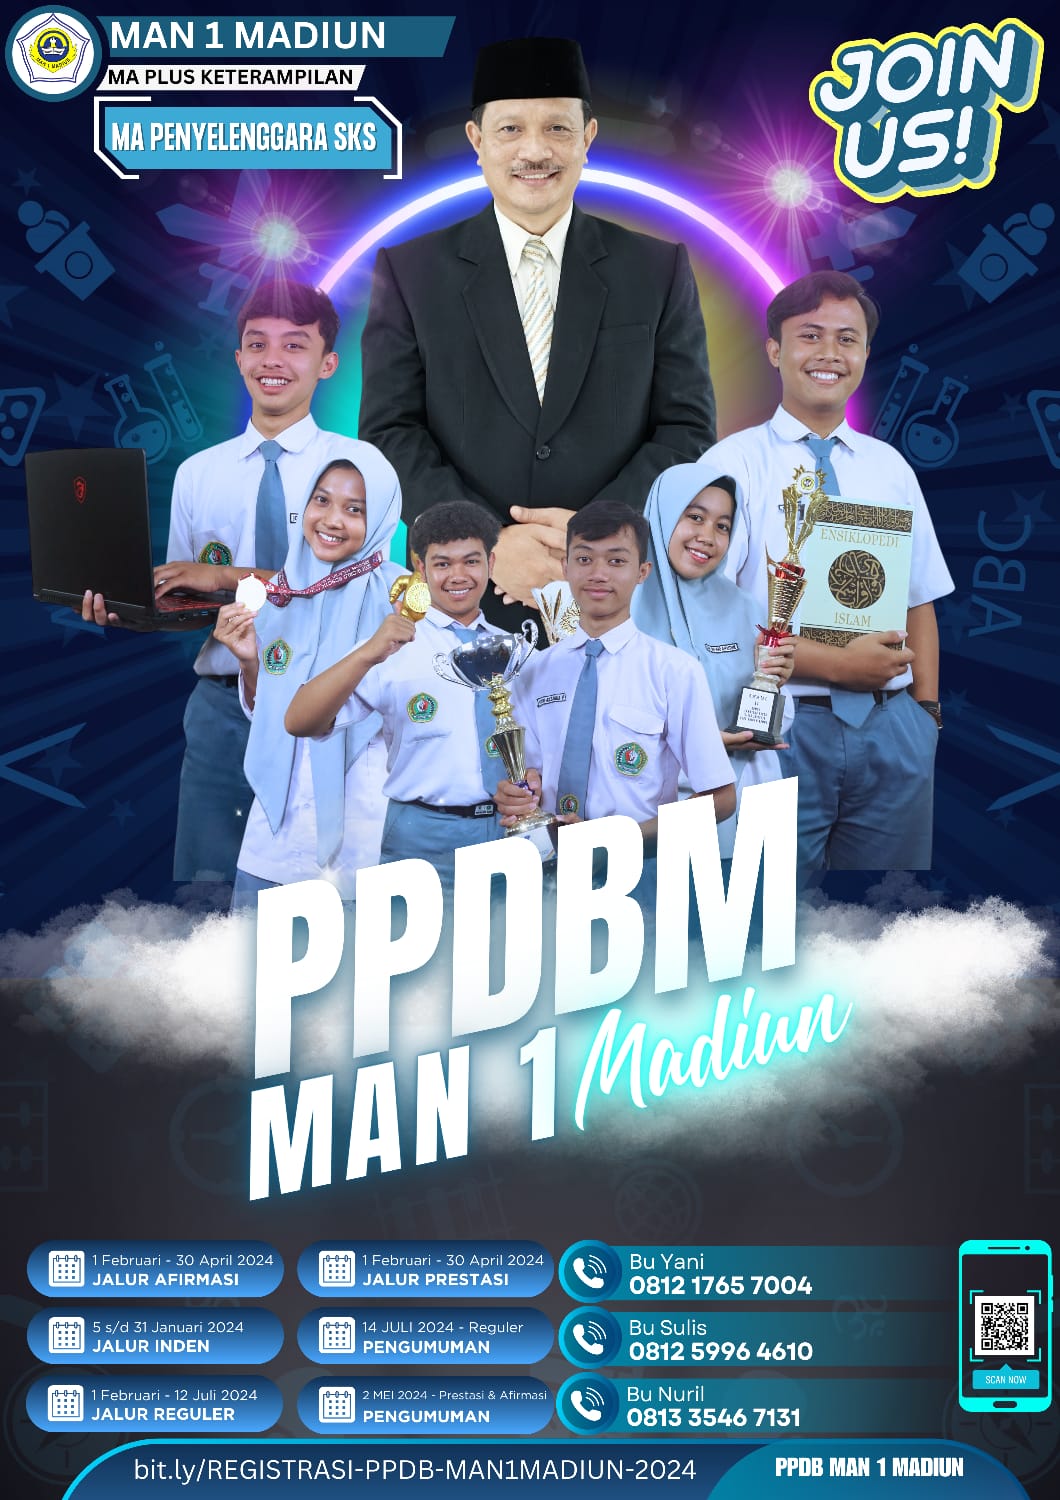 PPDBM MAN 1 MADIUN 2024/2025